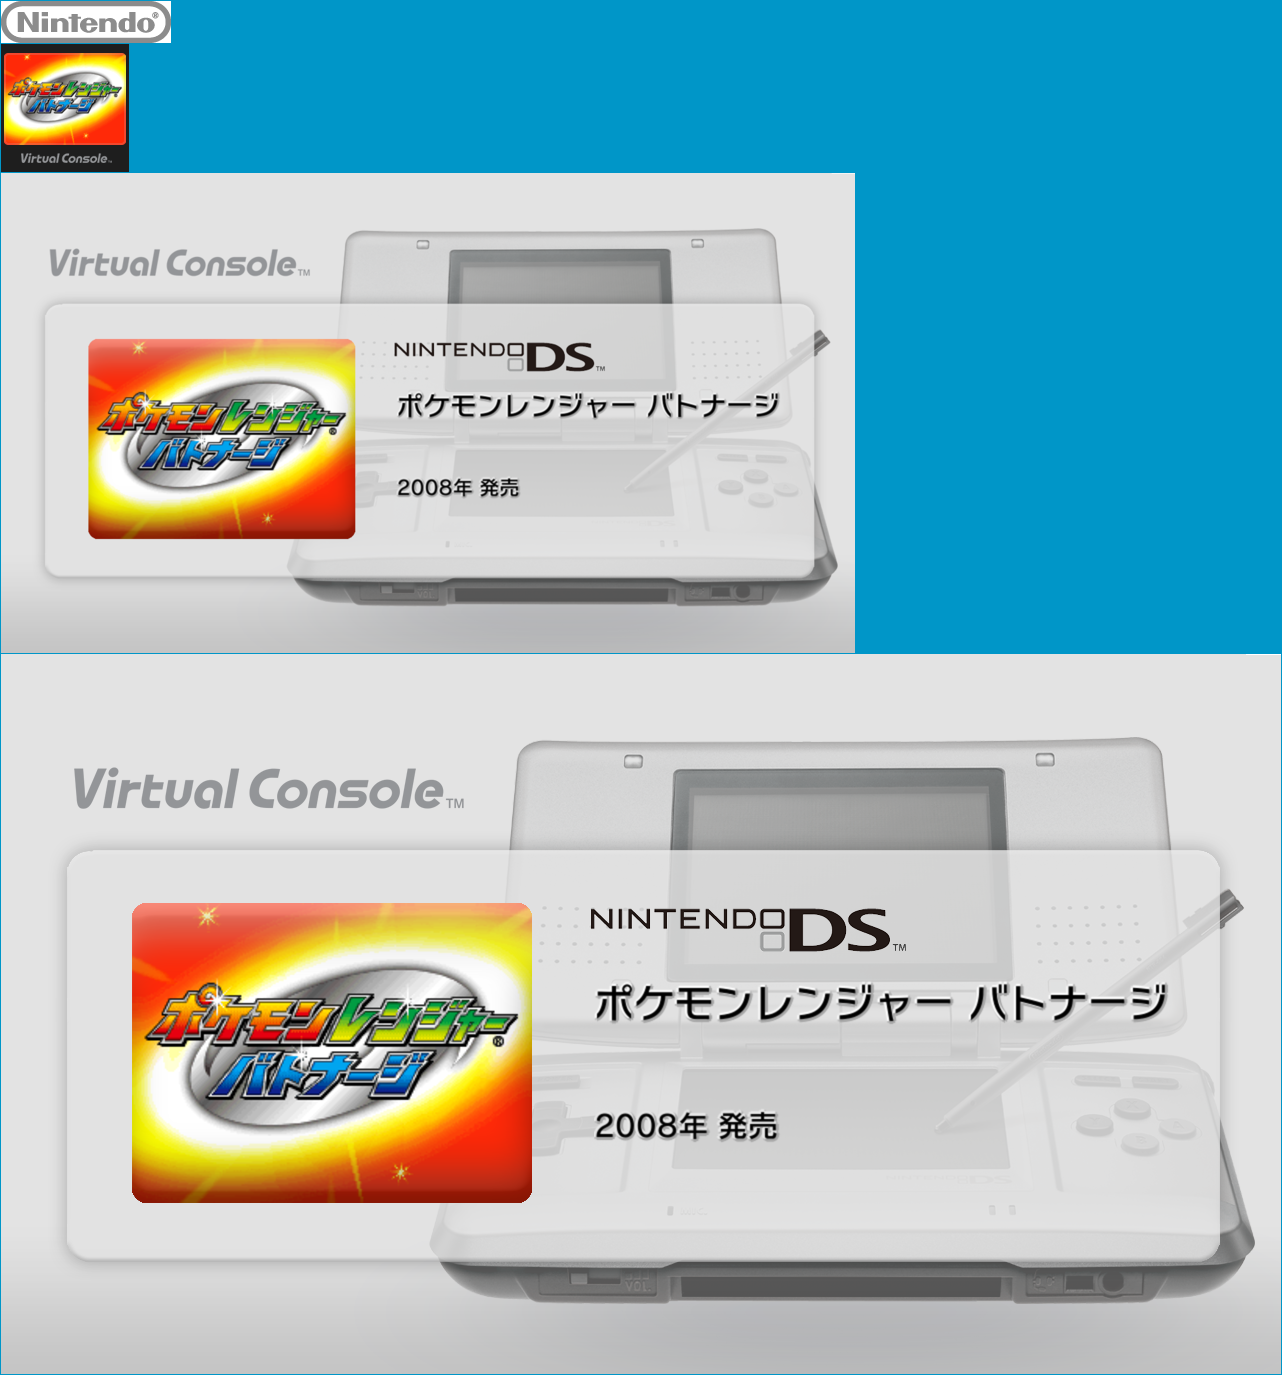 Virtual Console - Pokémon Ranger: Vatonage